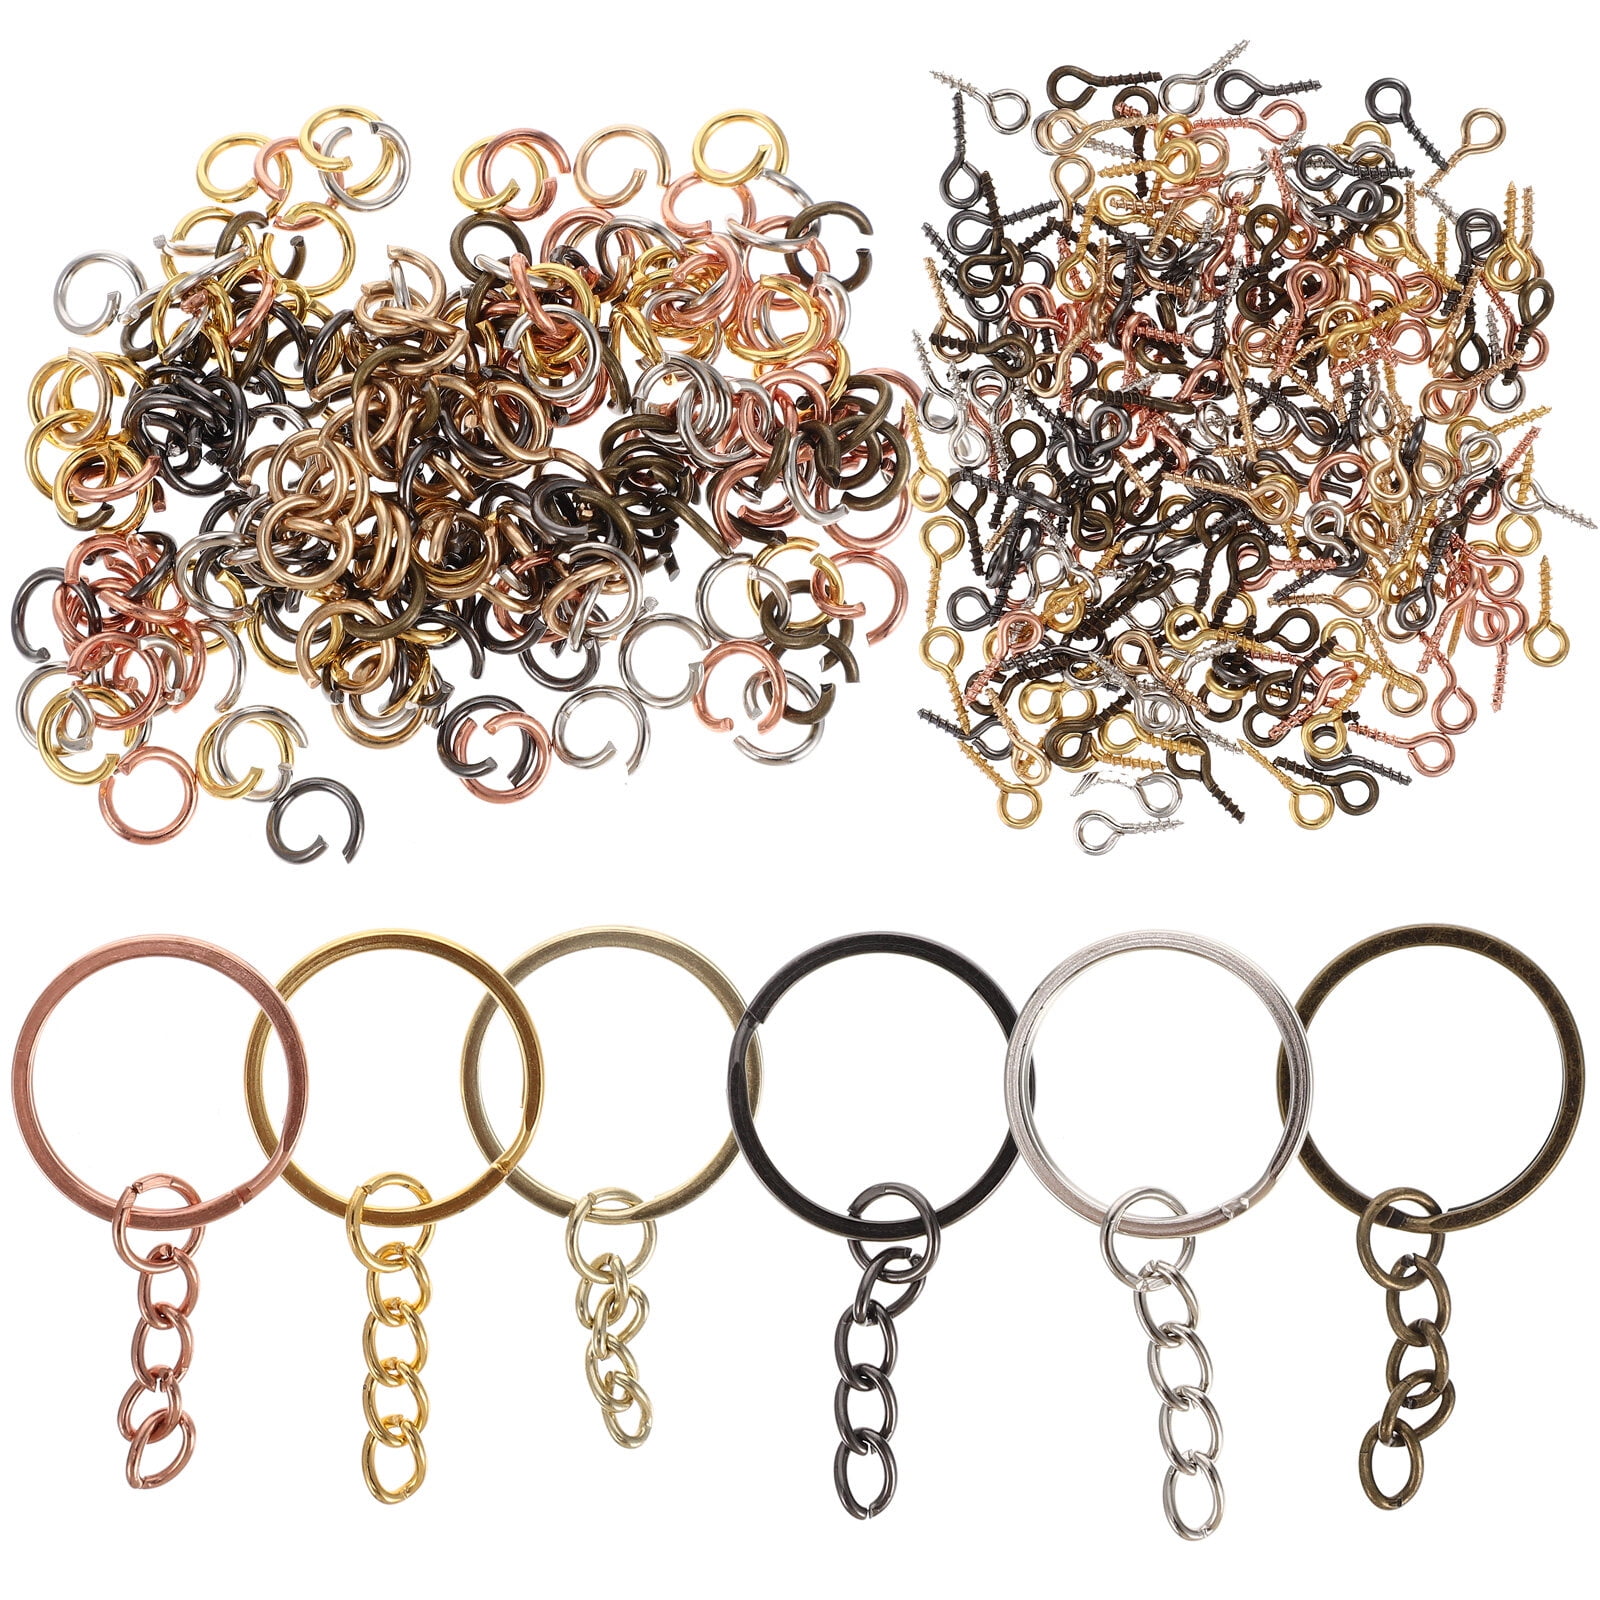 Homemaxs 450pcs Key Chain Making Kit DIY Keychain Supplies Keychain with Chain Key Rings Screw Eye Pin, Women's, Size: 5x2.5x0.60cm